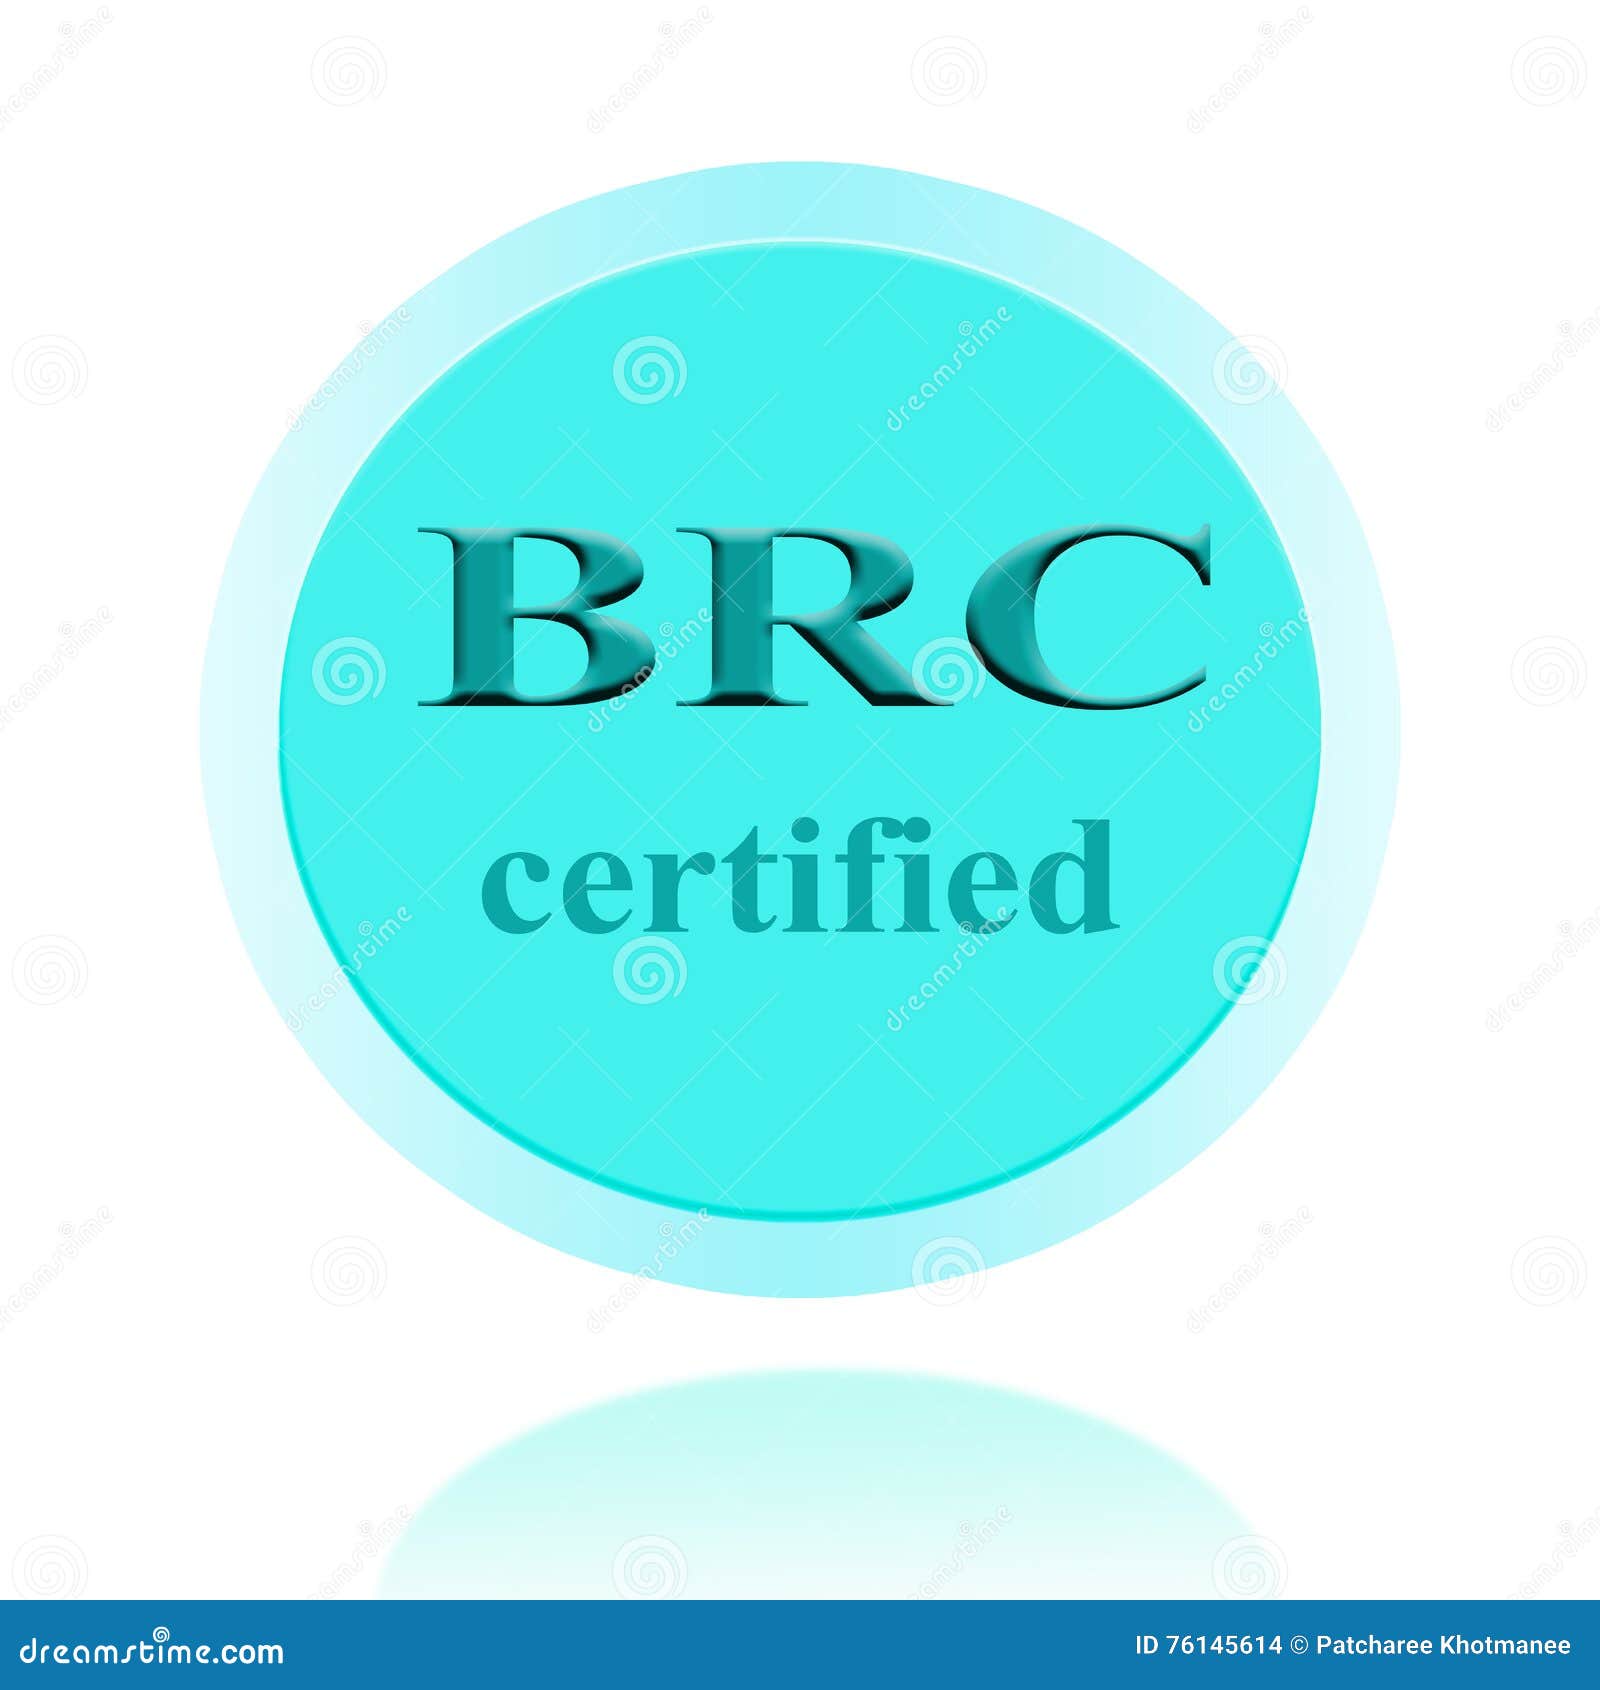 brc food certificate logo clipart